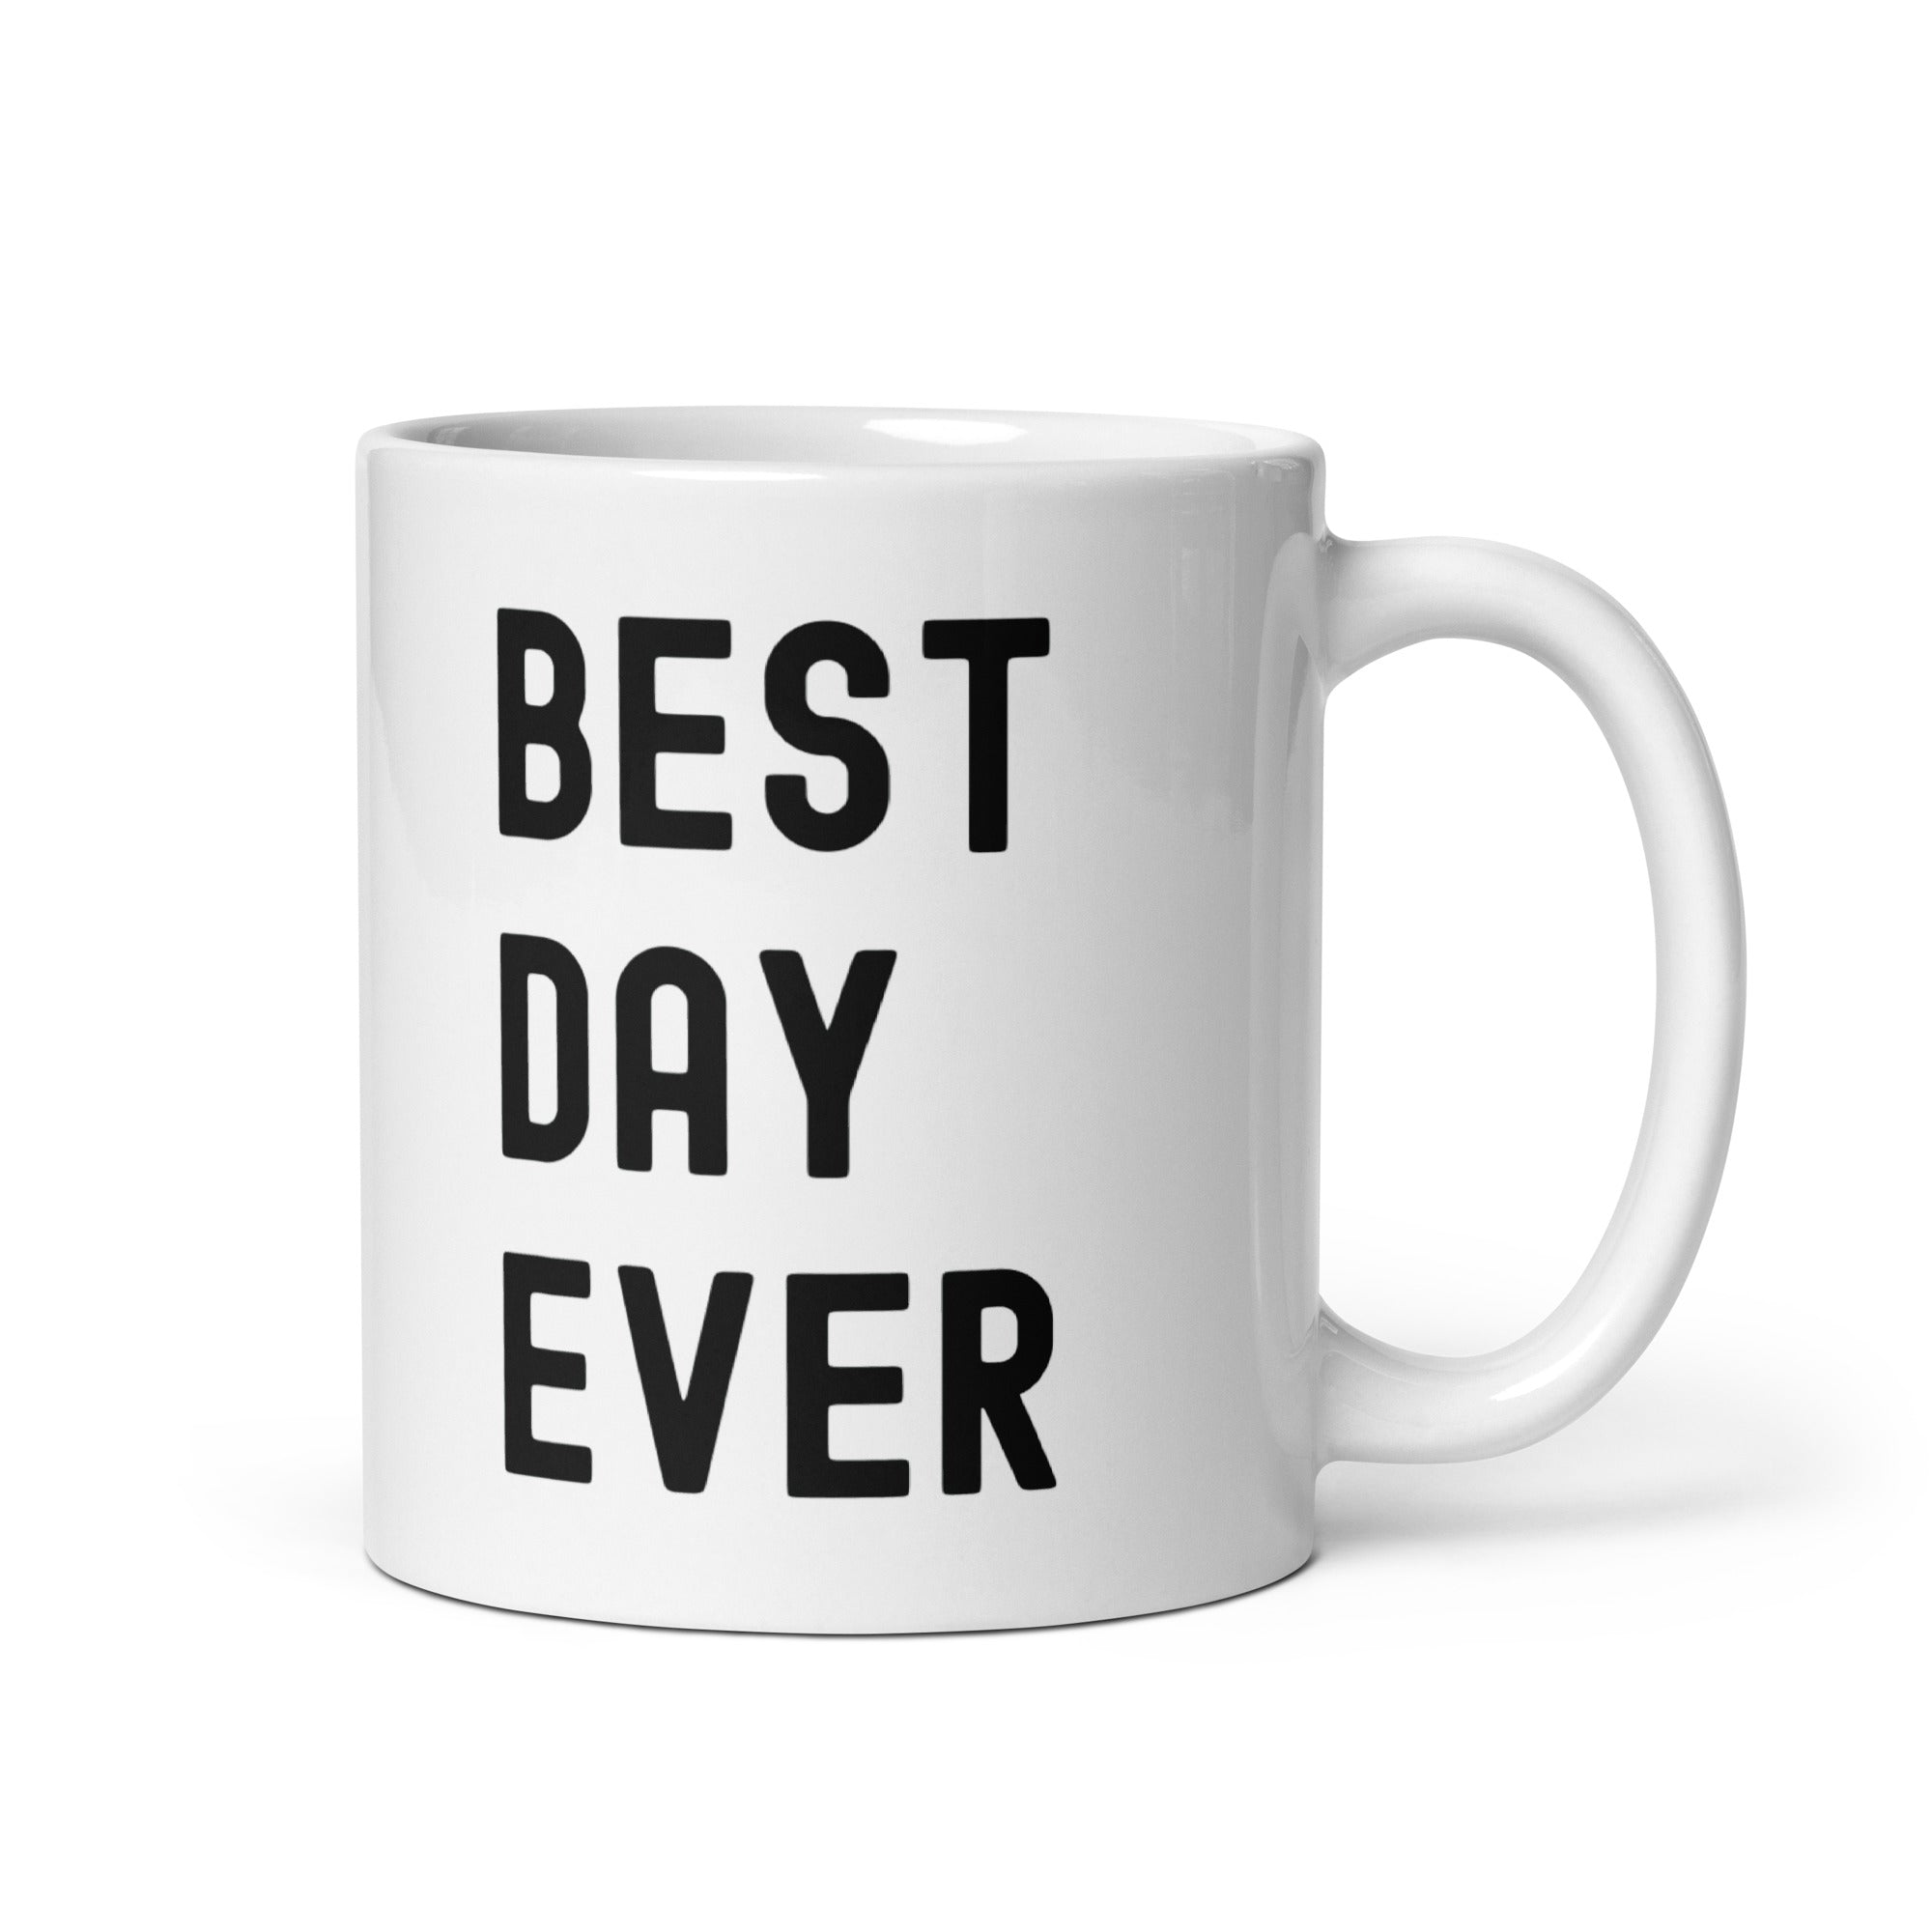 White glossy mug | The best day ever